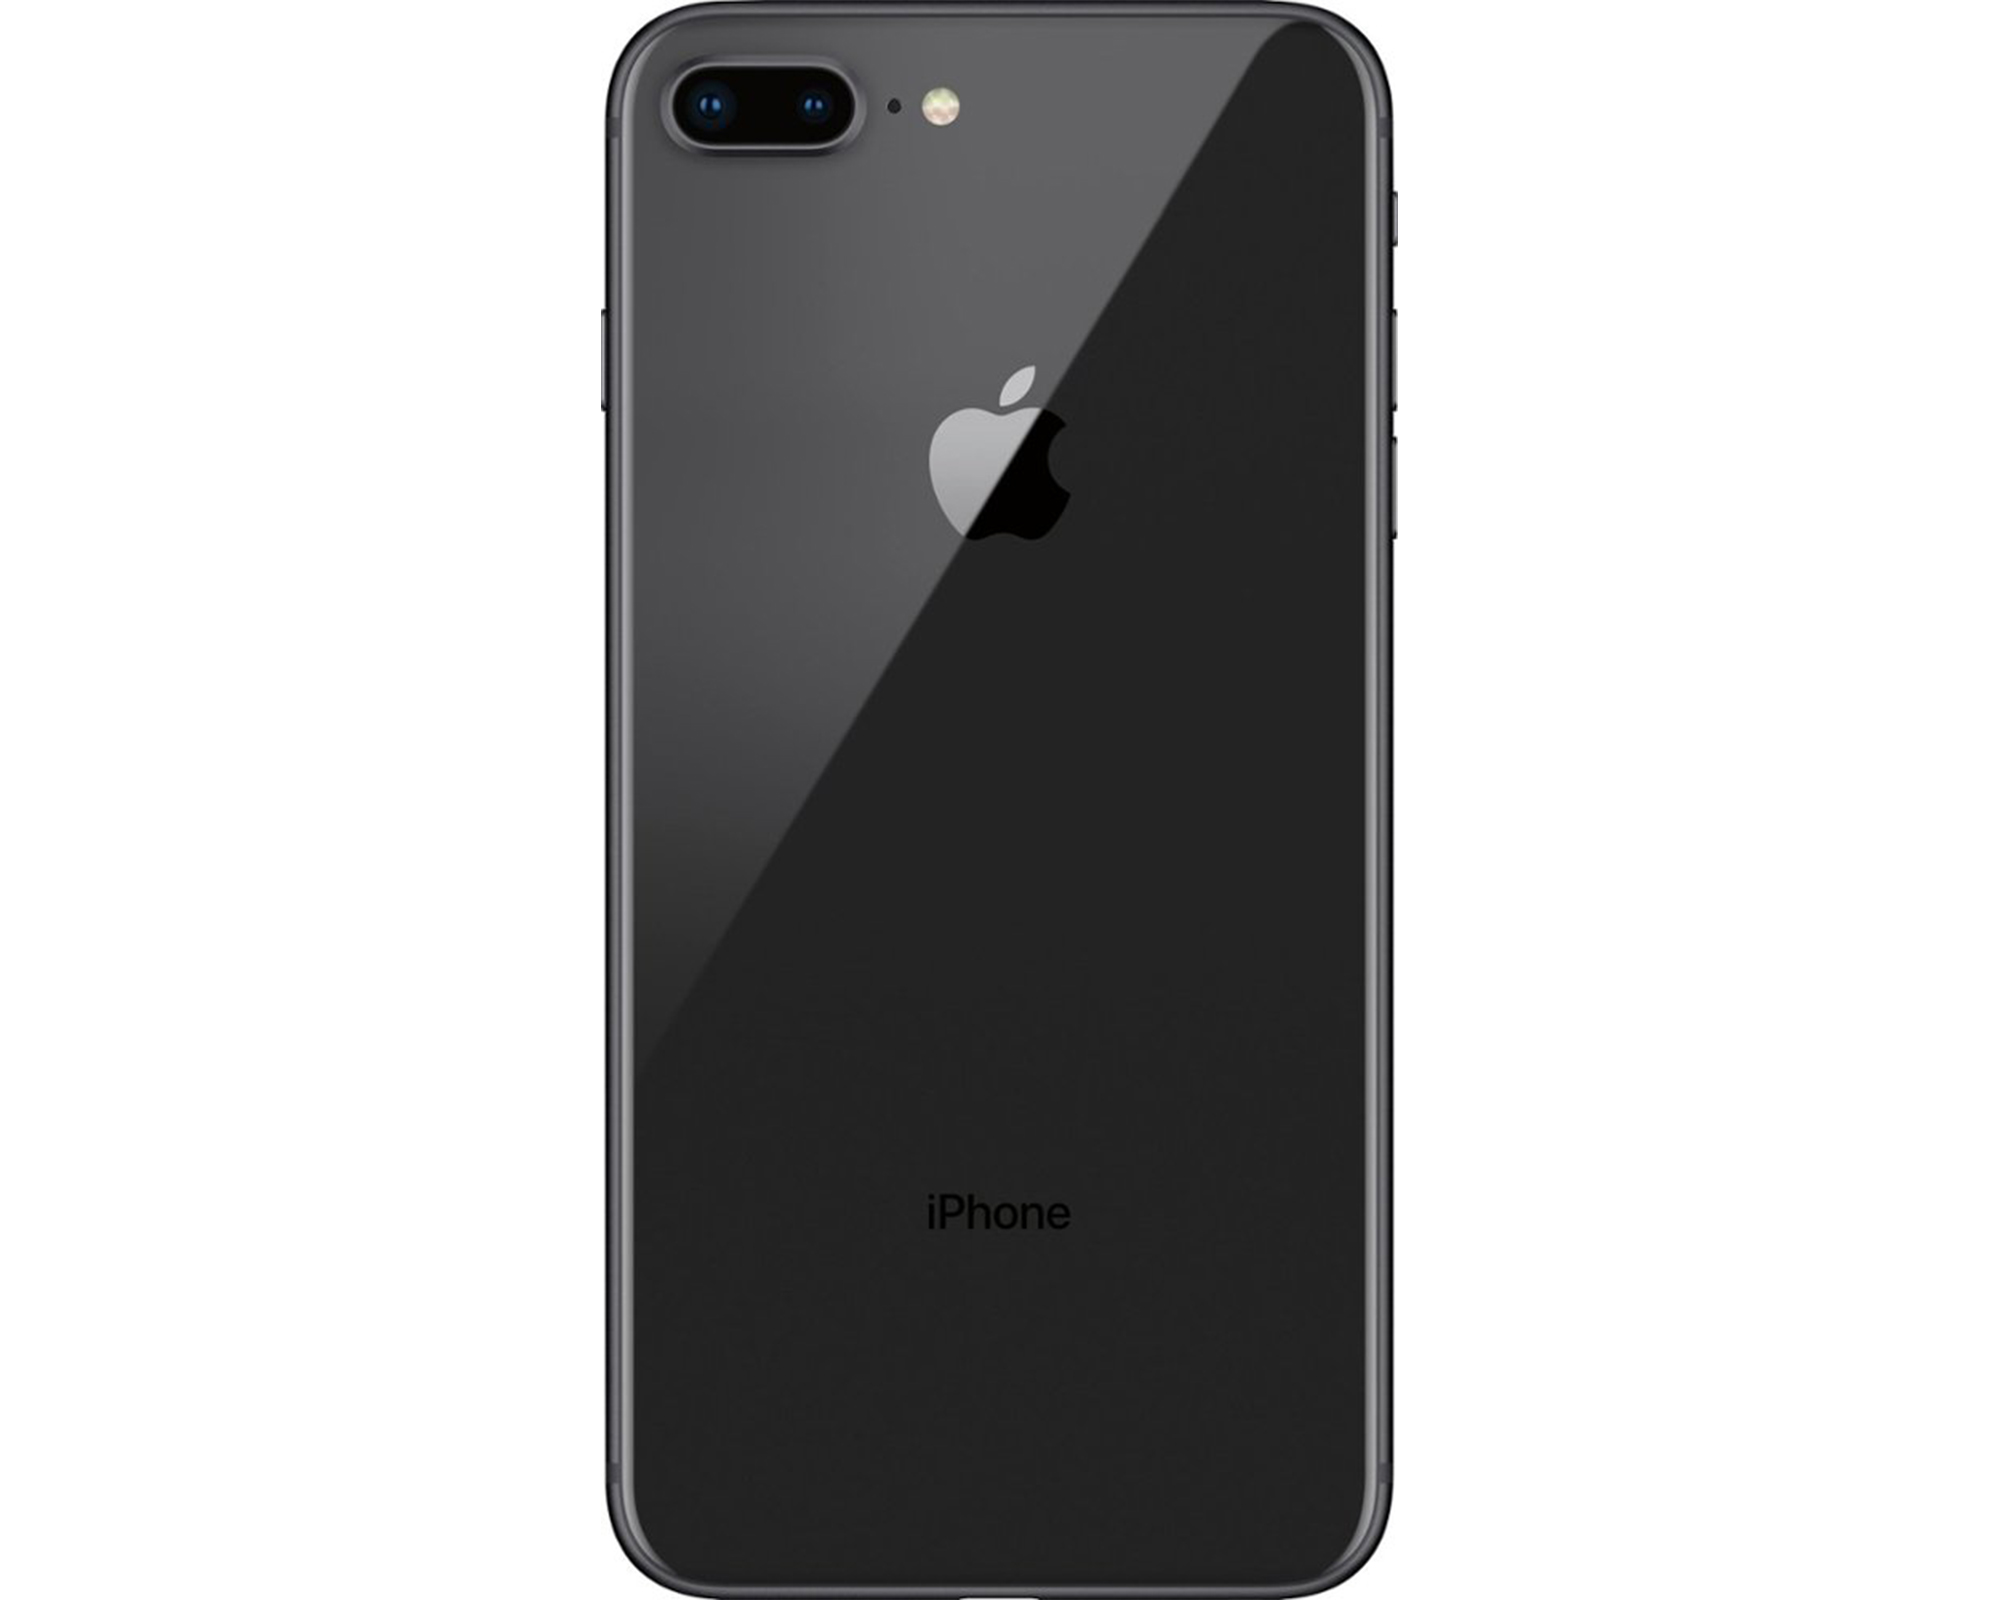 Restored Apple iPhone 8 Plus 64GB, Space Gray - Unlocked GSM (Refurbished) - image 2 of 5